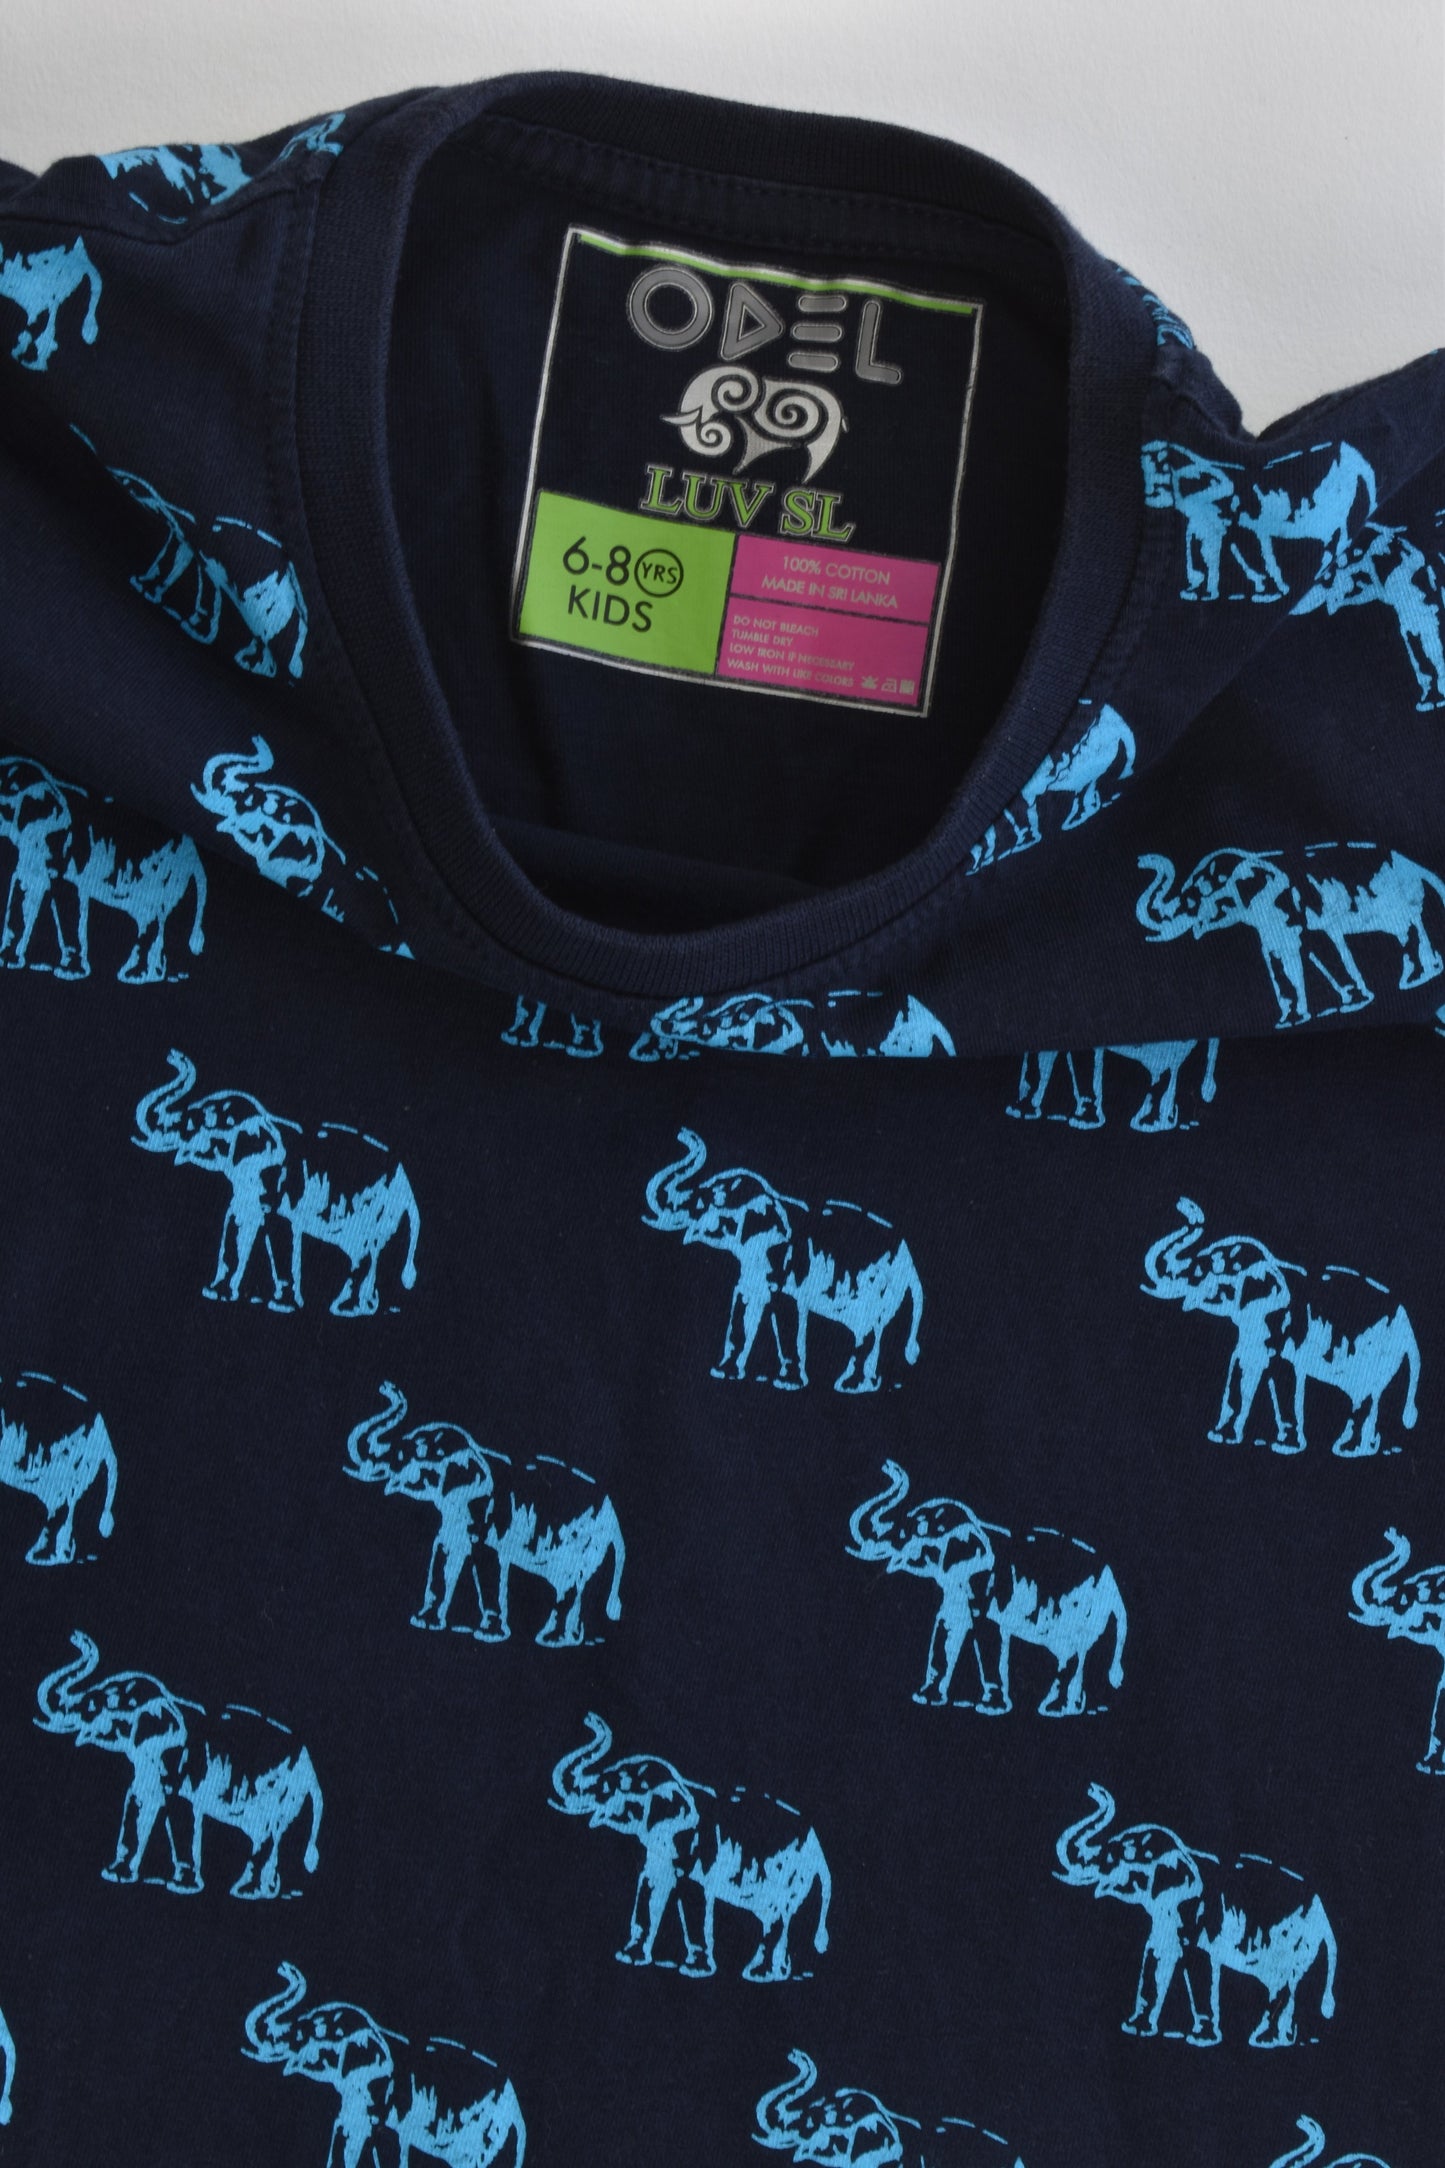 Odel's Luv SL Size 6-8 Elephants T-shirt